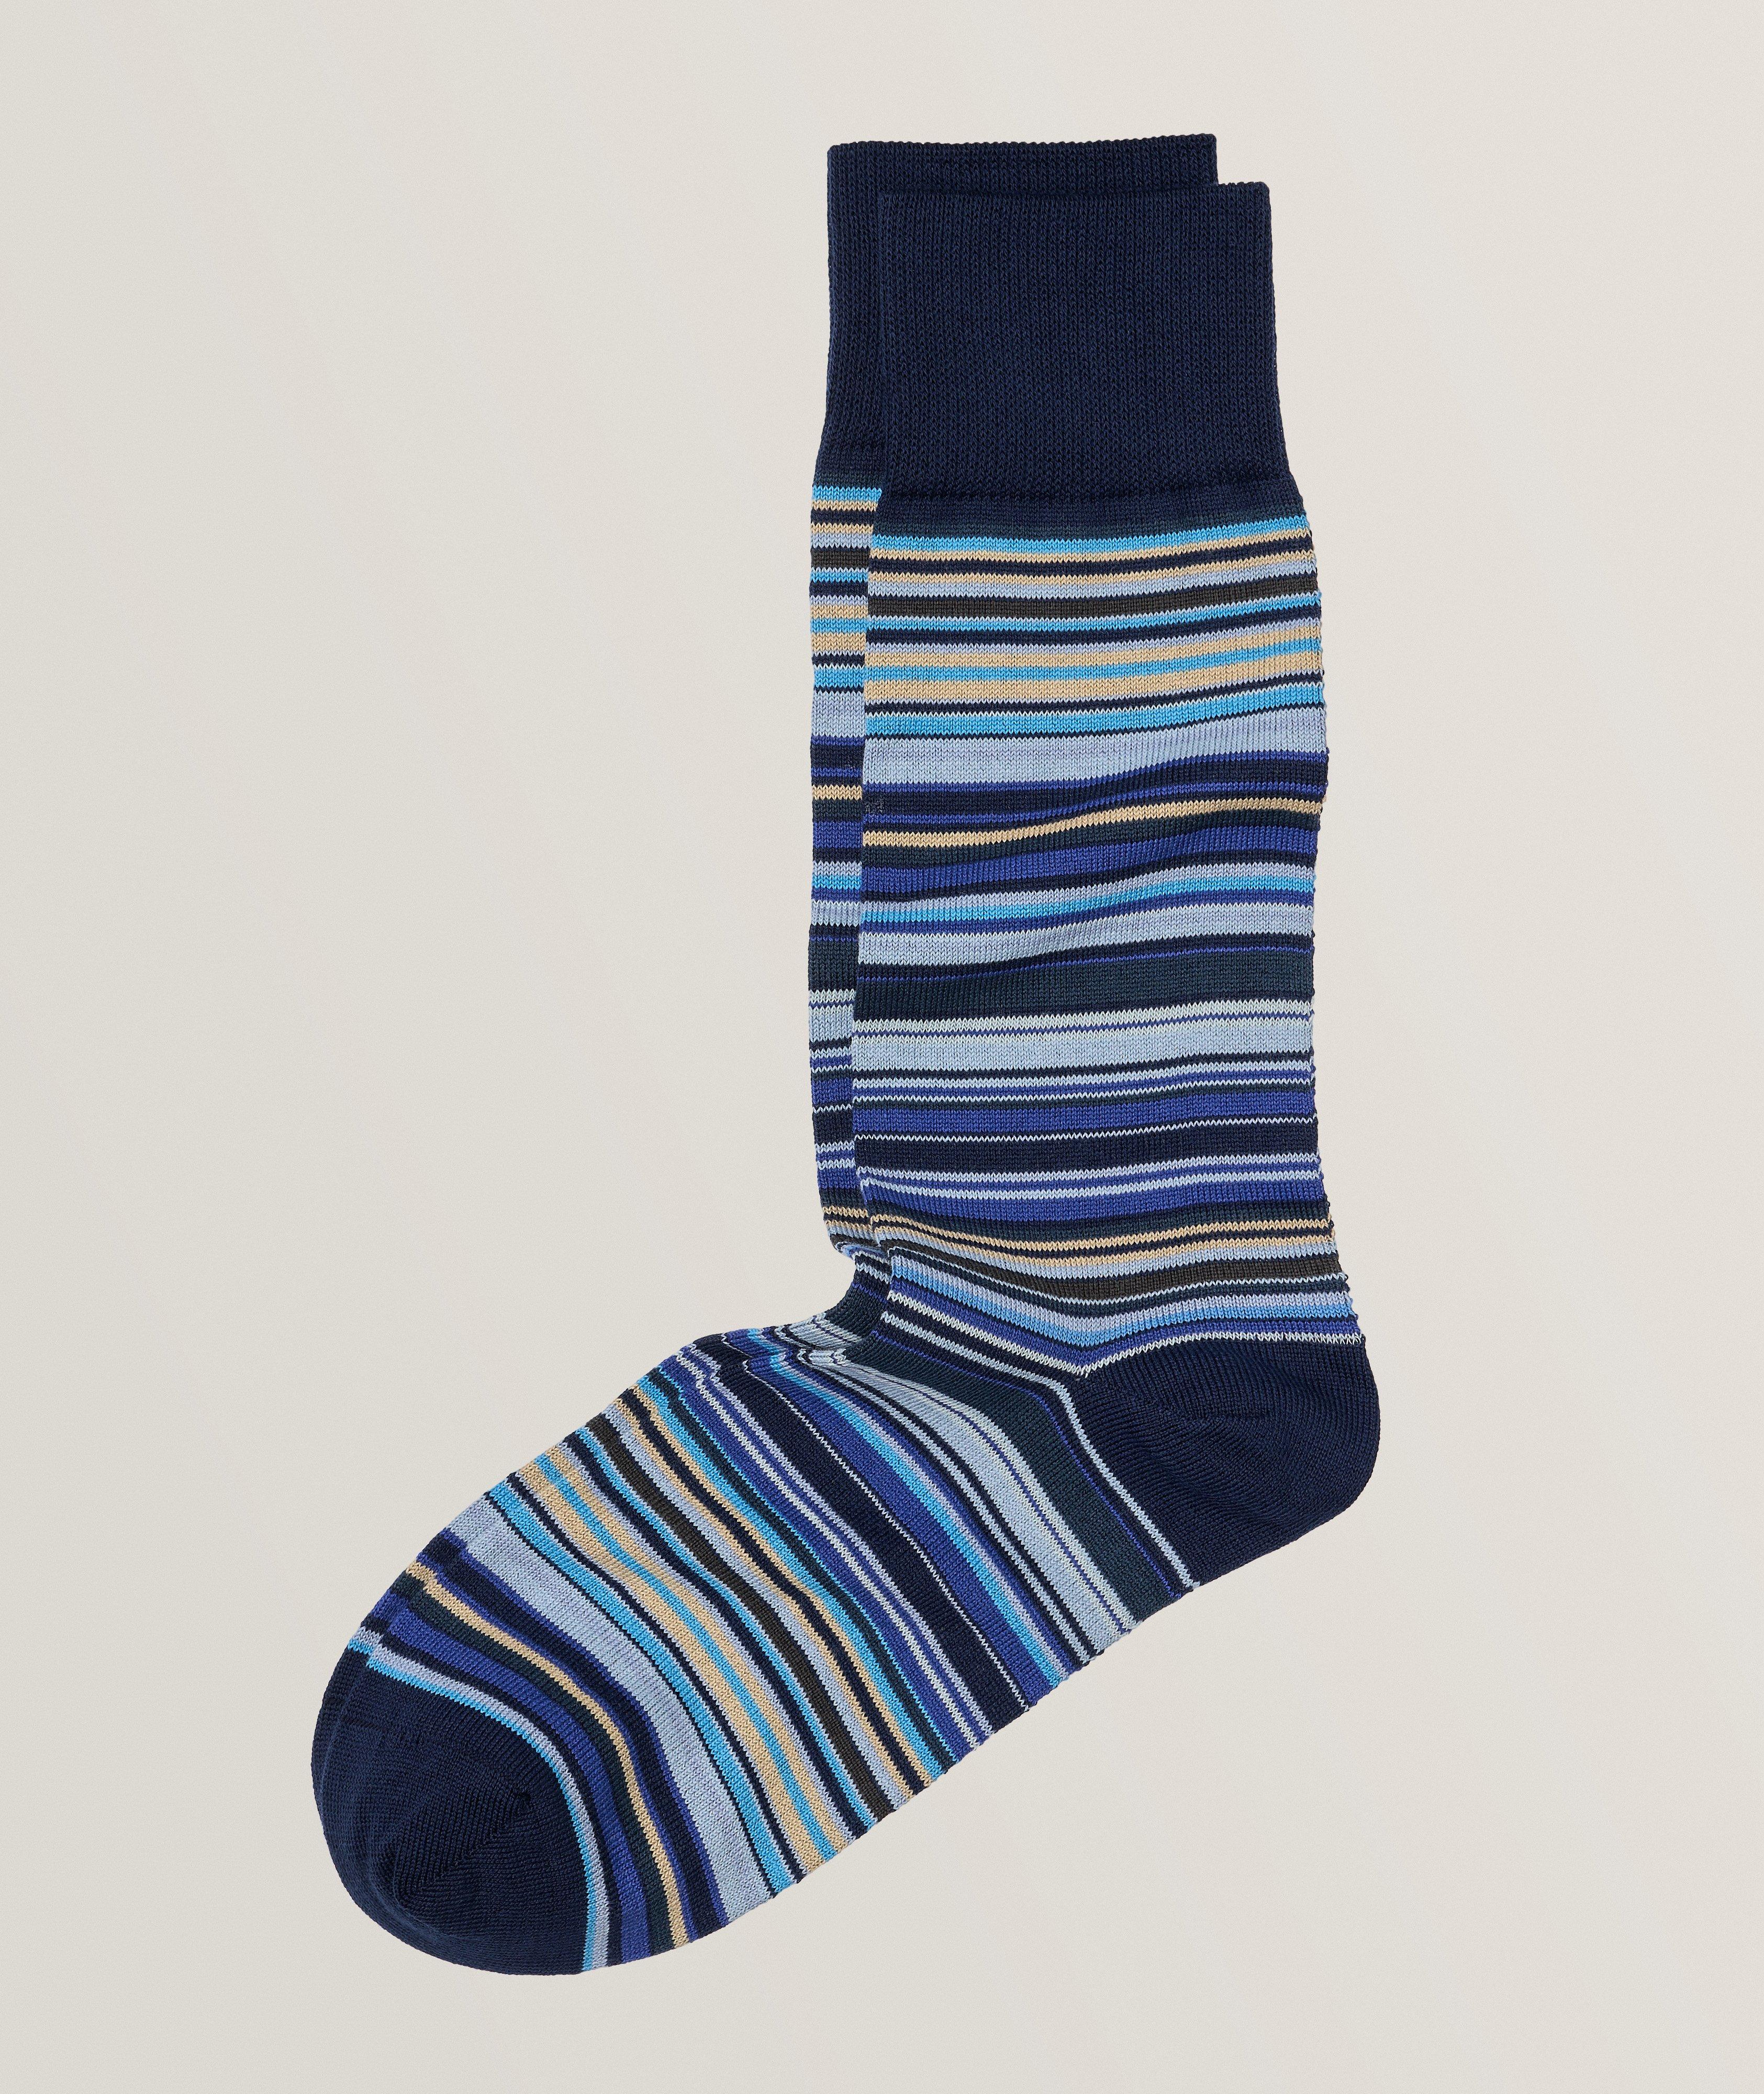 Signature Stripe Cotton-Blend Knit Socks image 0